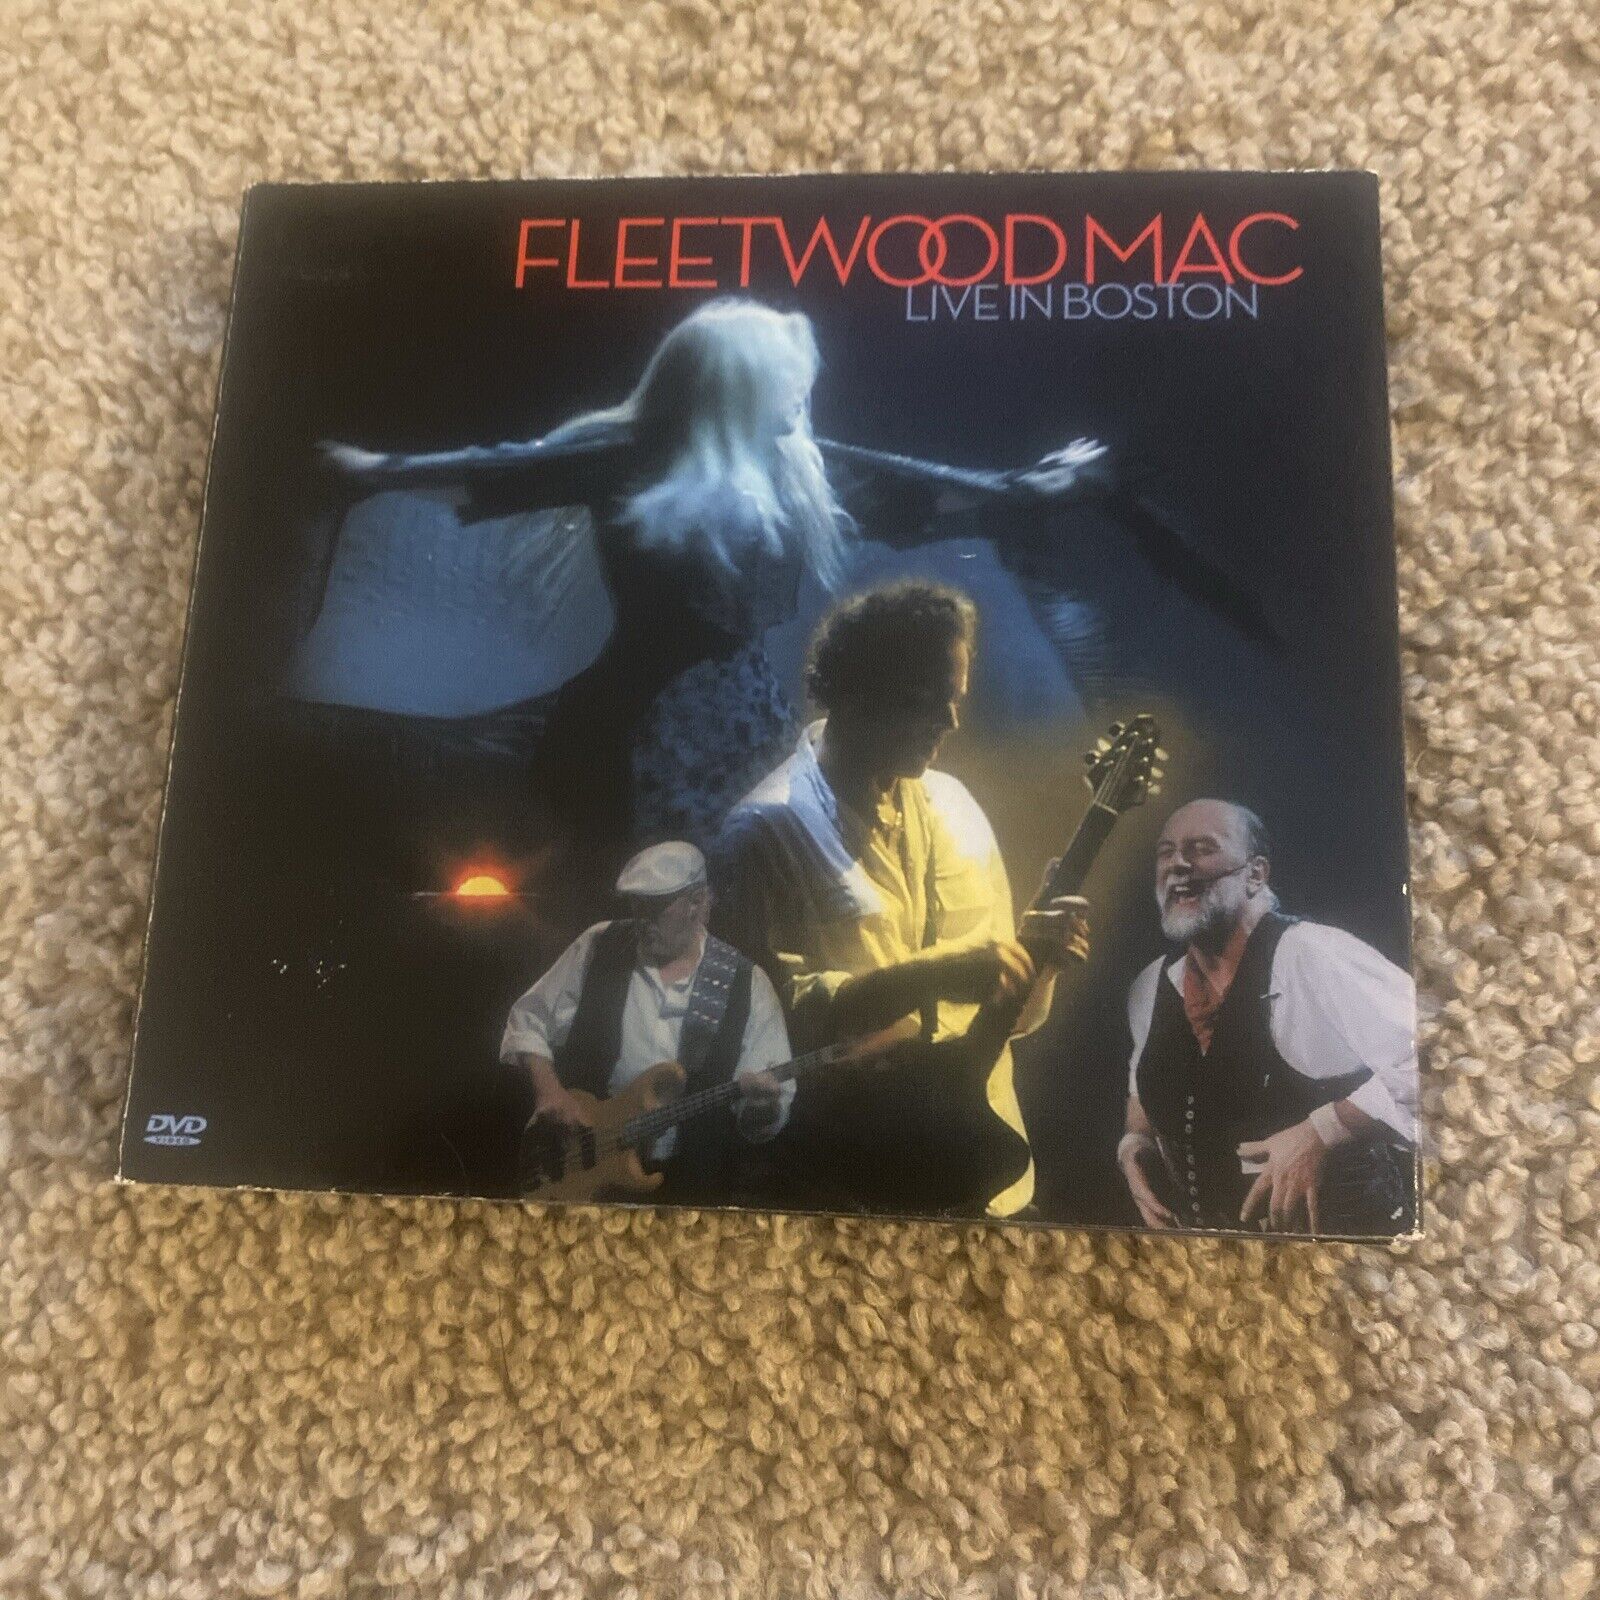 Fleetwood Mac - Live in Boston 2 DVD Set Only NO CD Full Artwork  Fast Ship